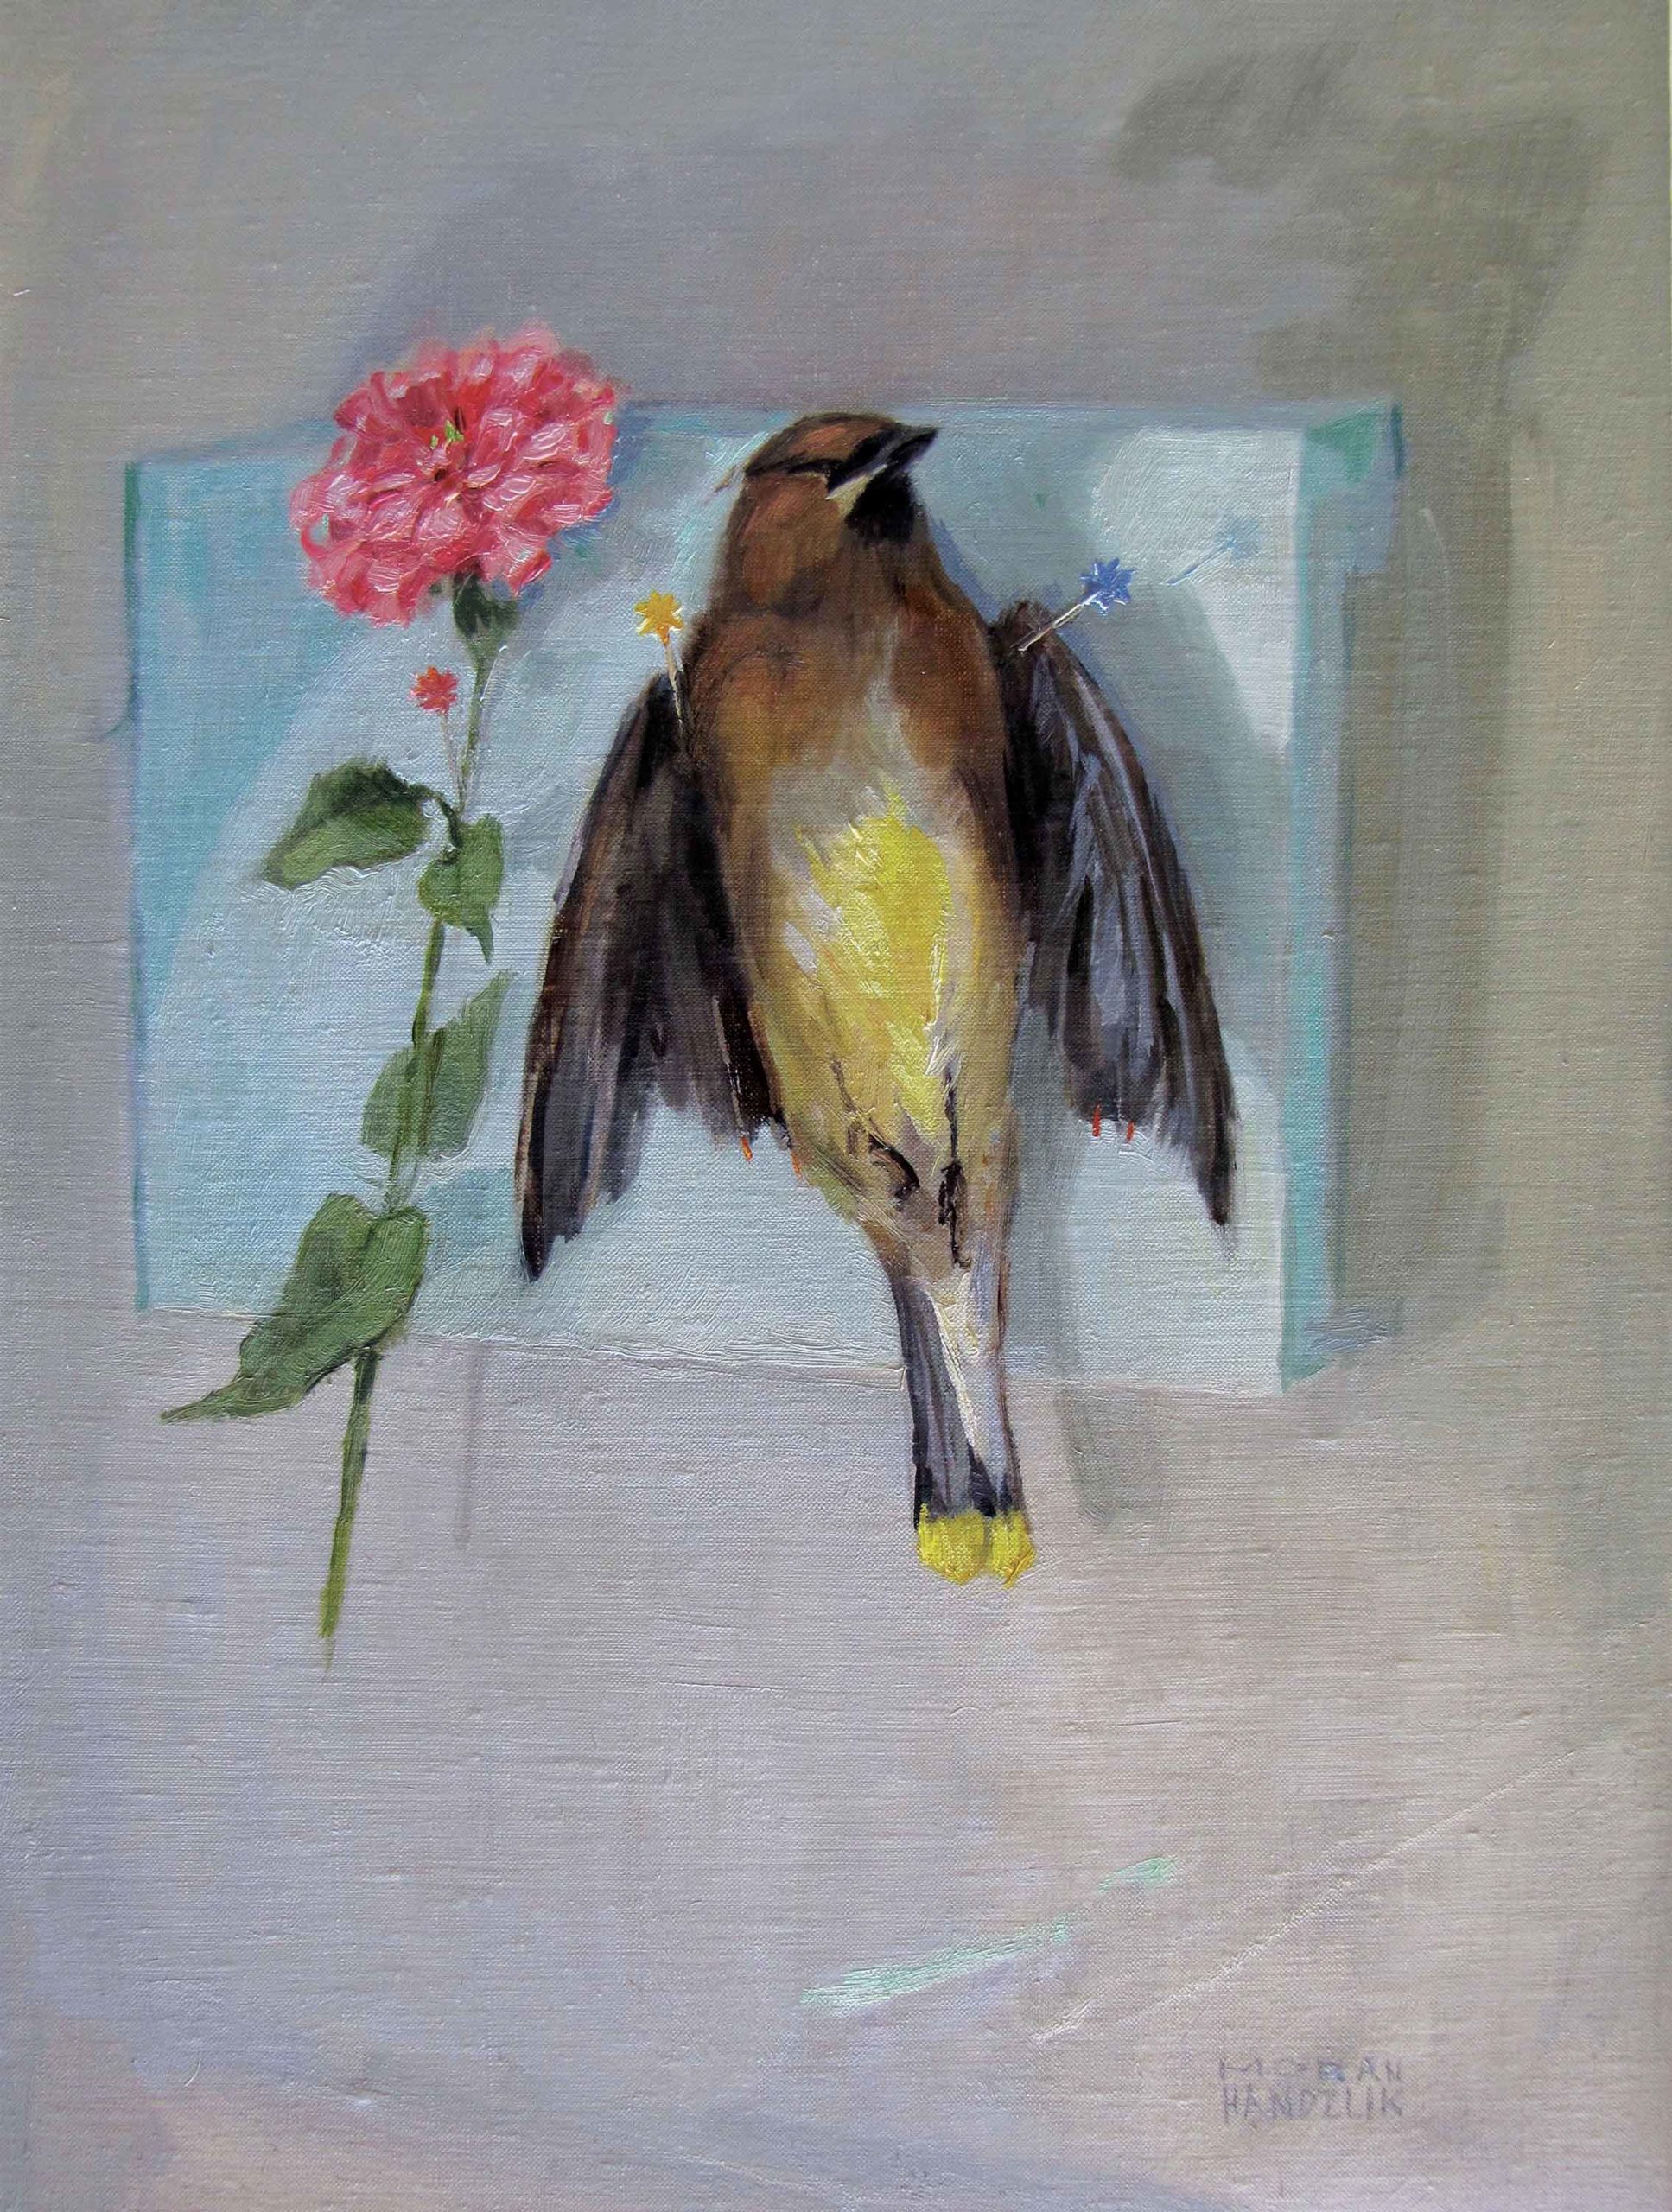 nature morte - Memento mori still life paintings - birds in art